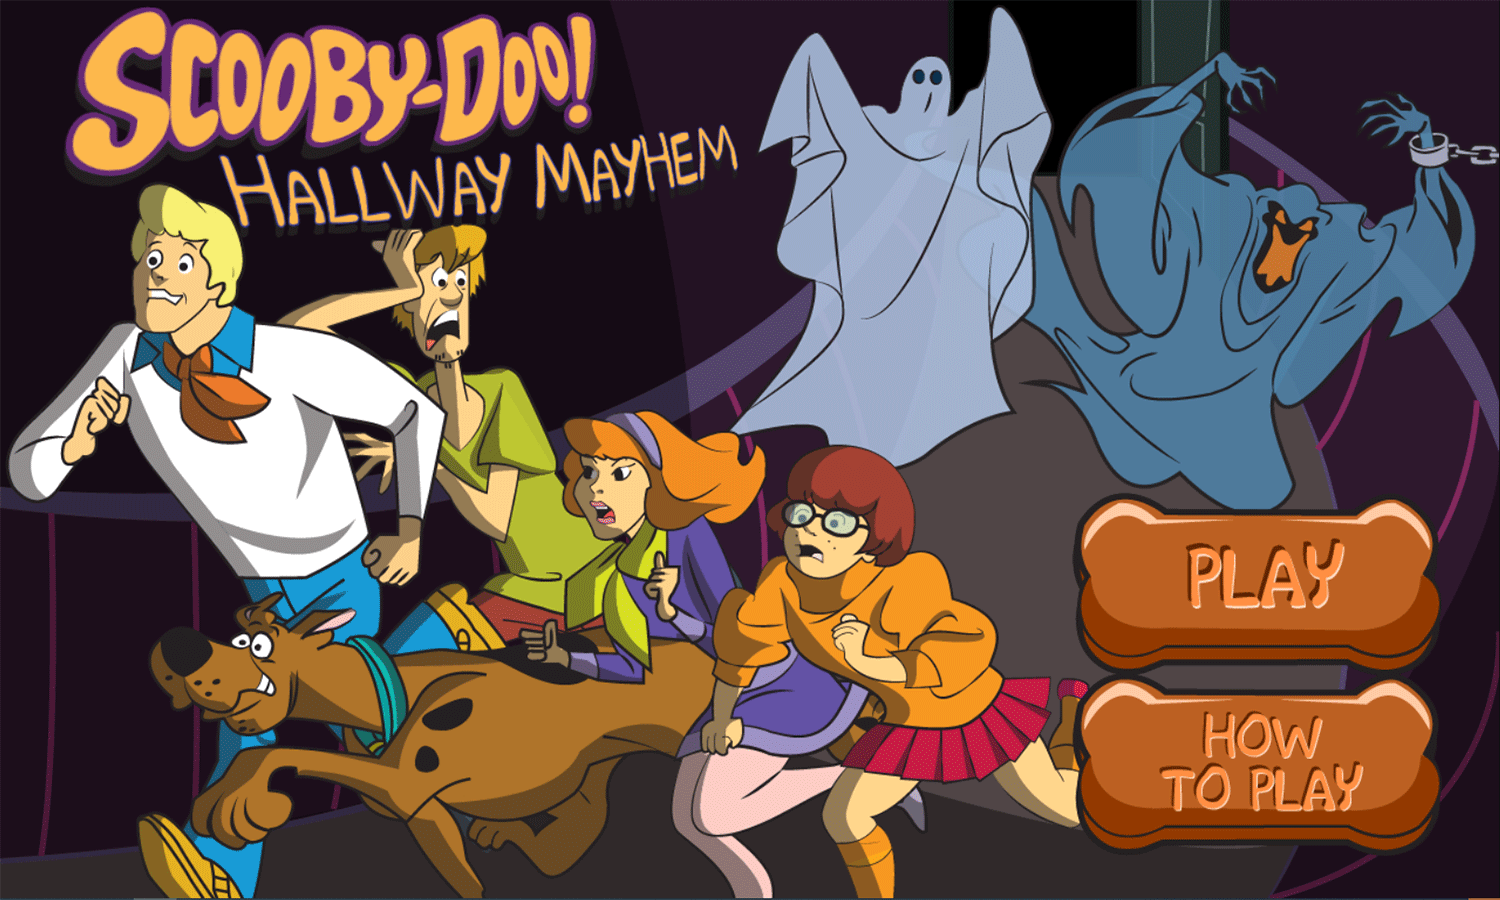 Scooby Doo Hallway Mayhem Welcome Screen Screenshot.